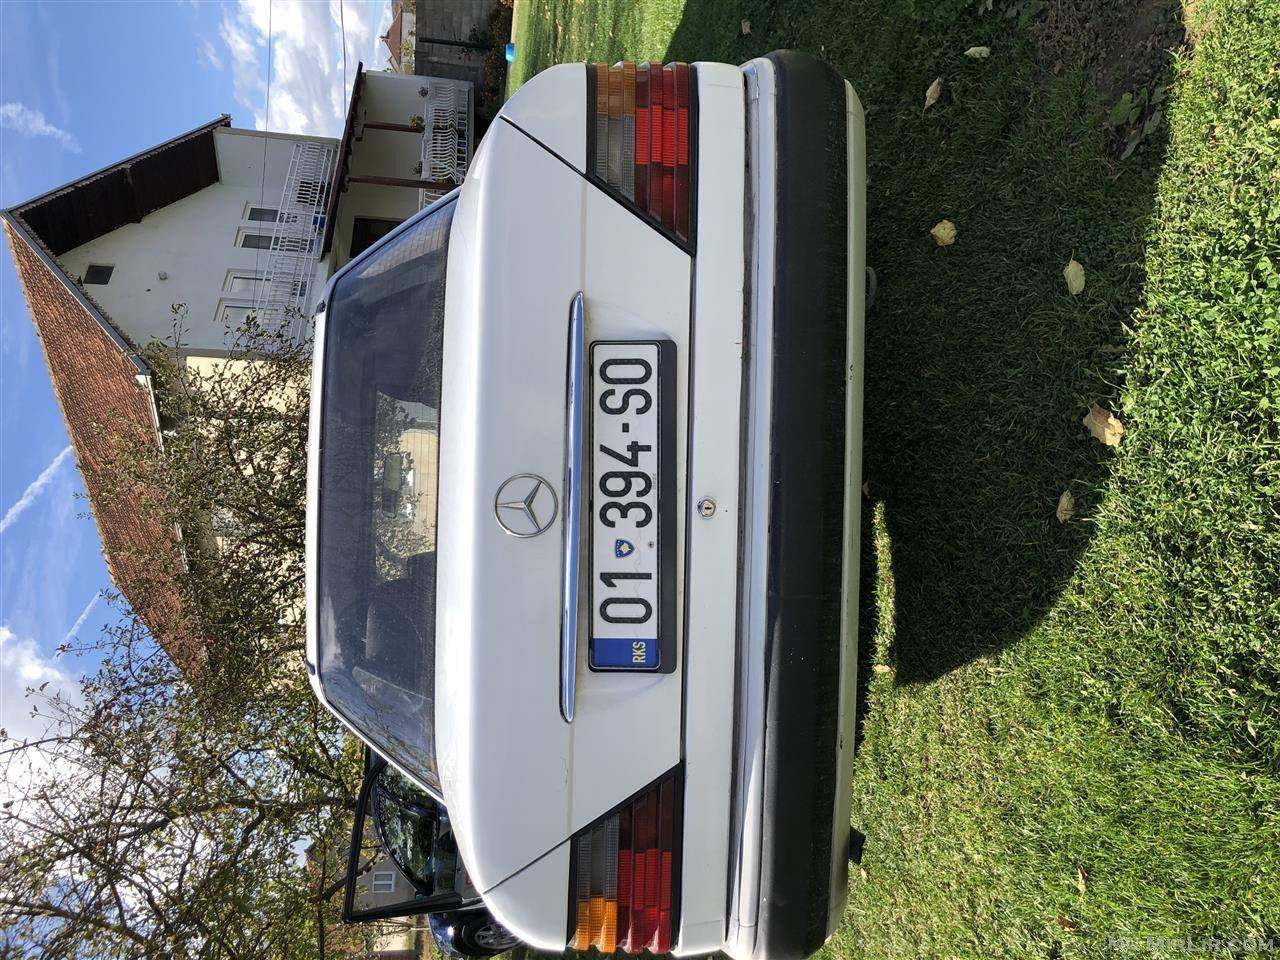 Mercedes Benz 200